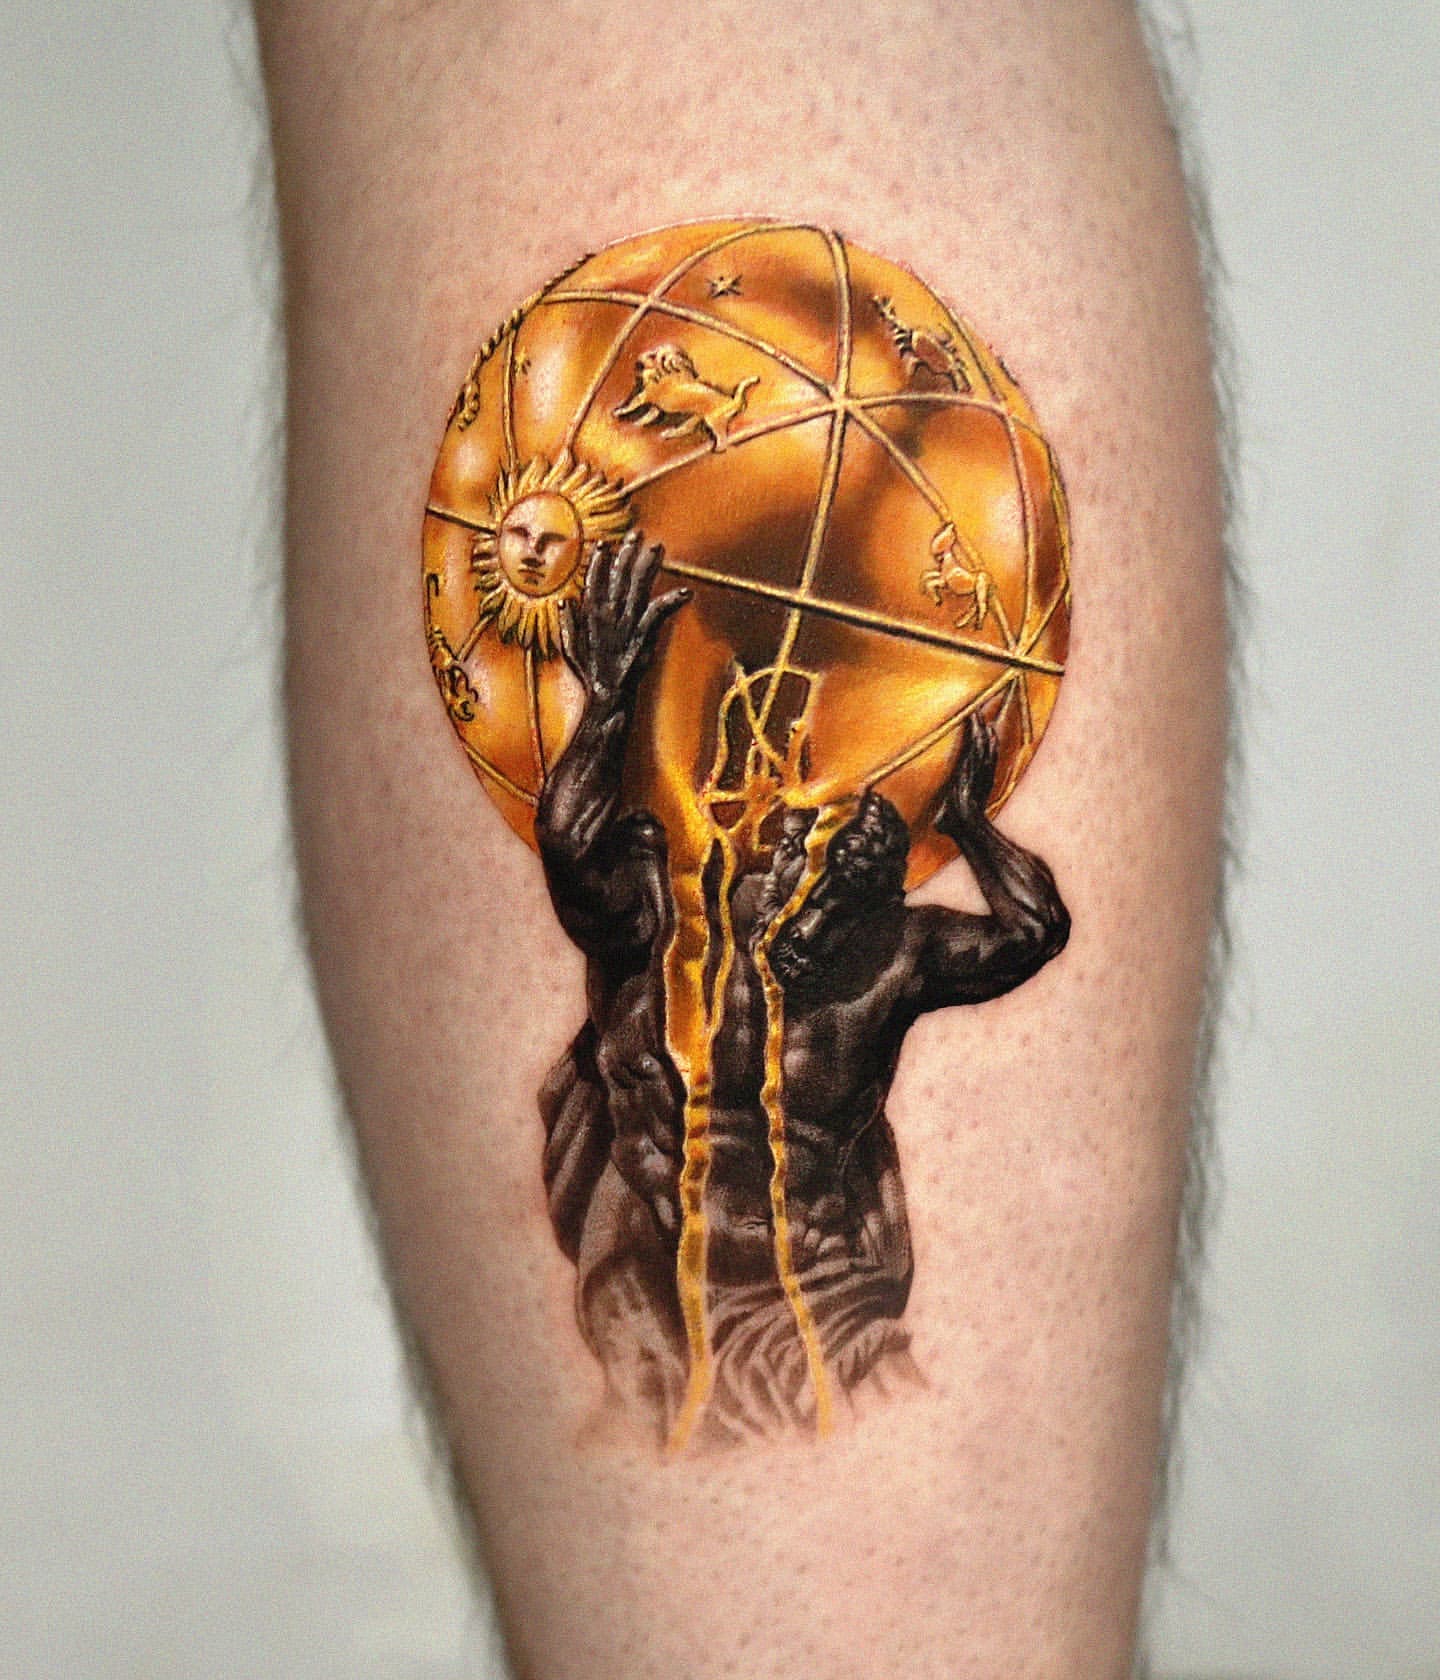 Odin done by Jesse Missman at Midnight Gallery in Sacramento Ca : r/tattoos